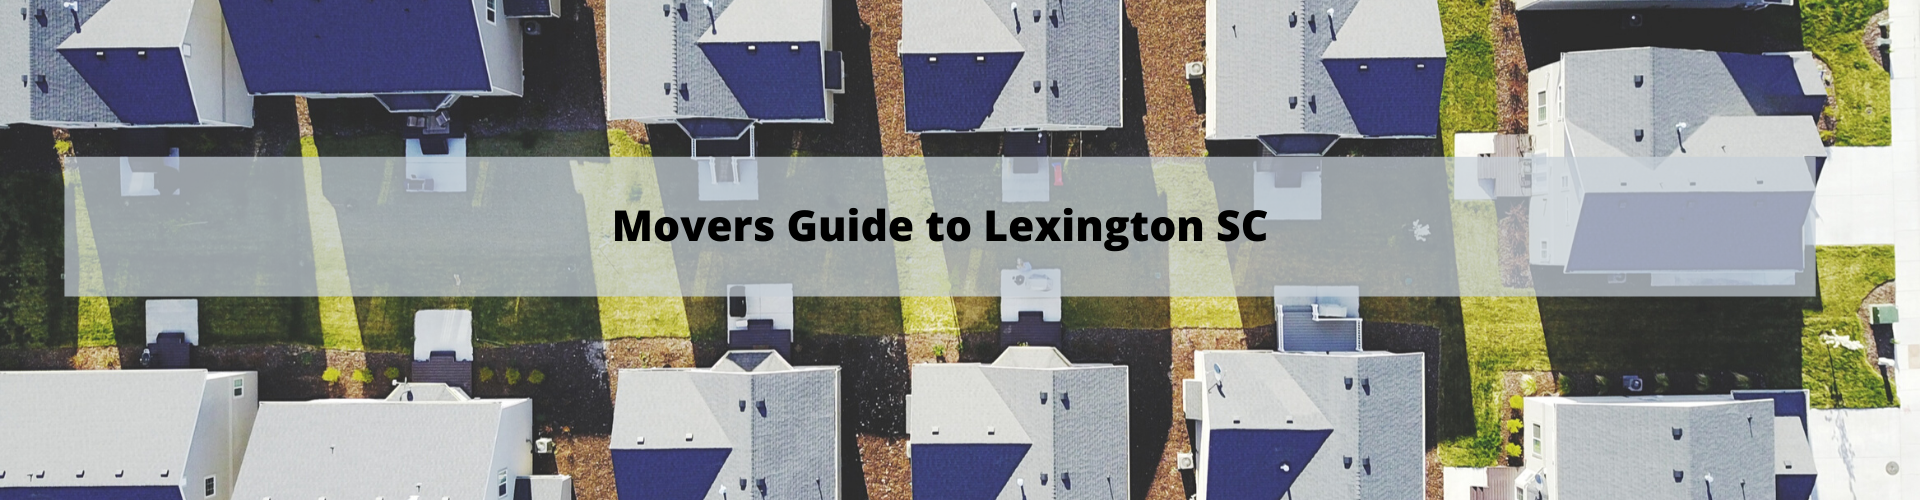 Movers Guide to Lexington SC